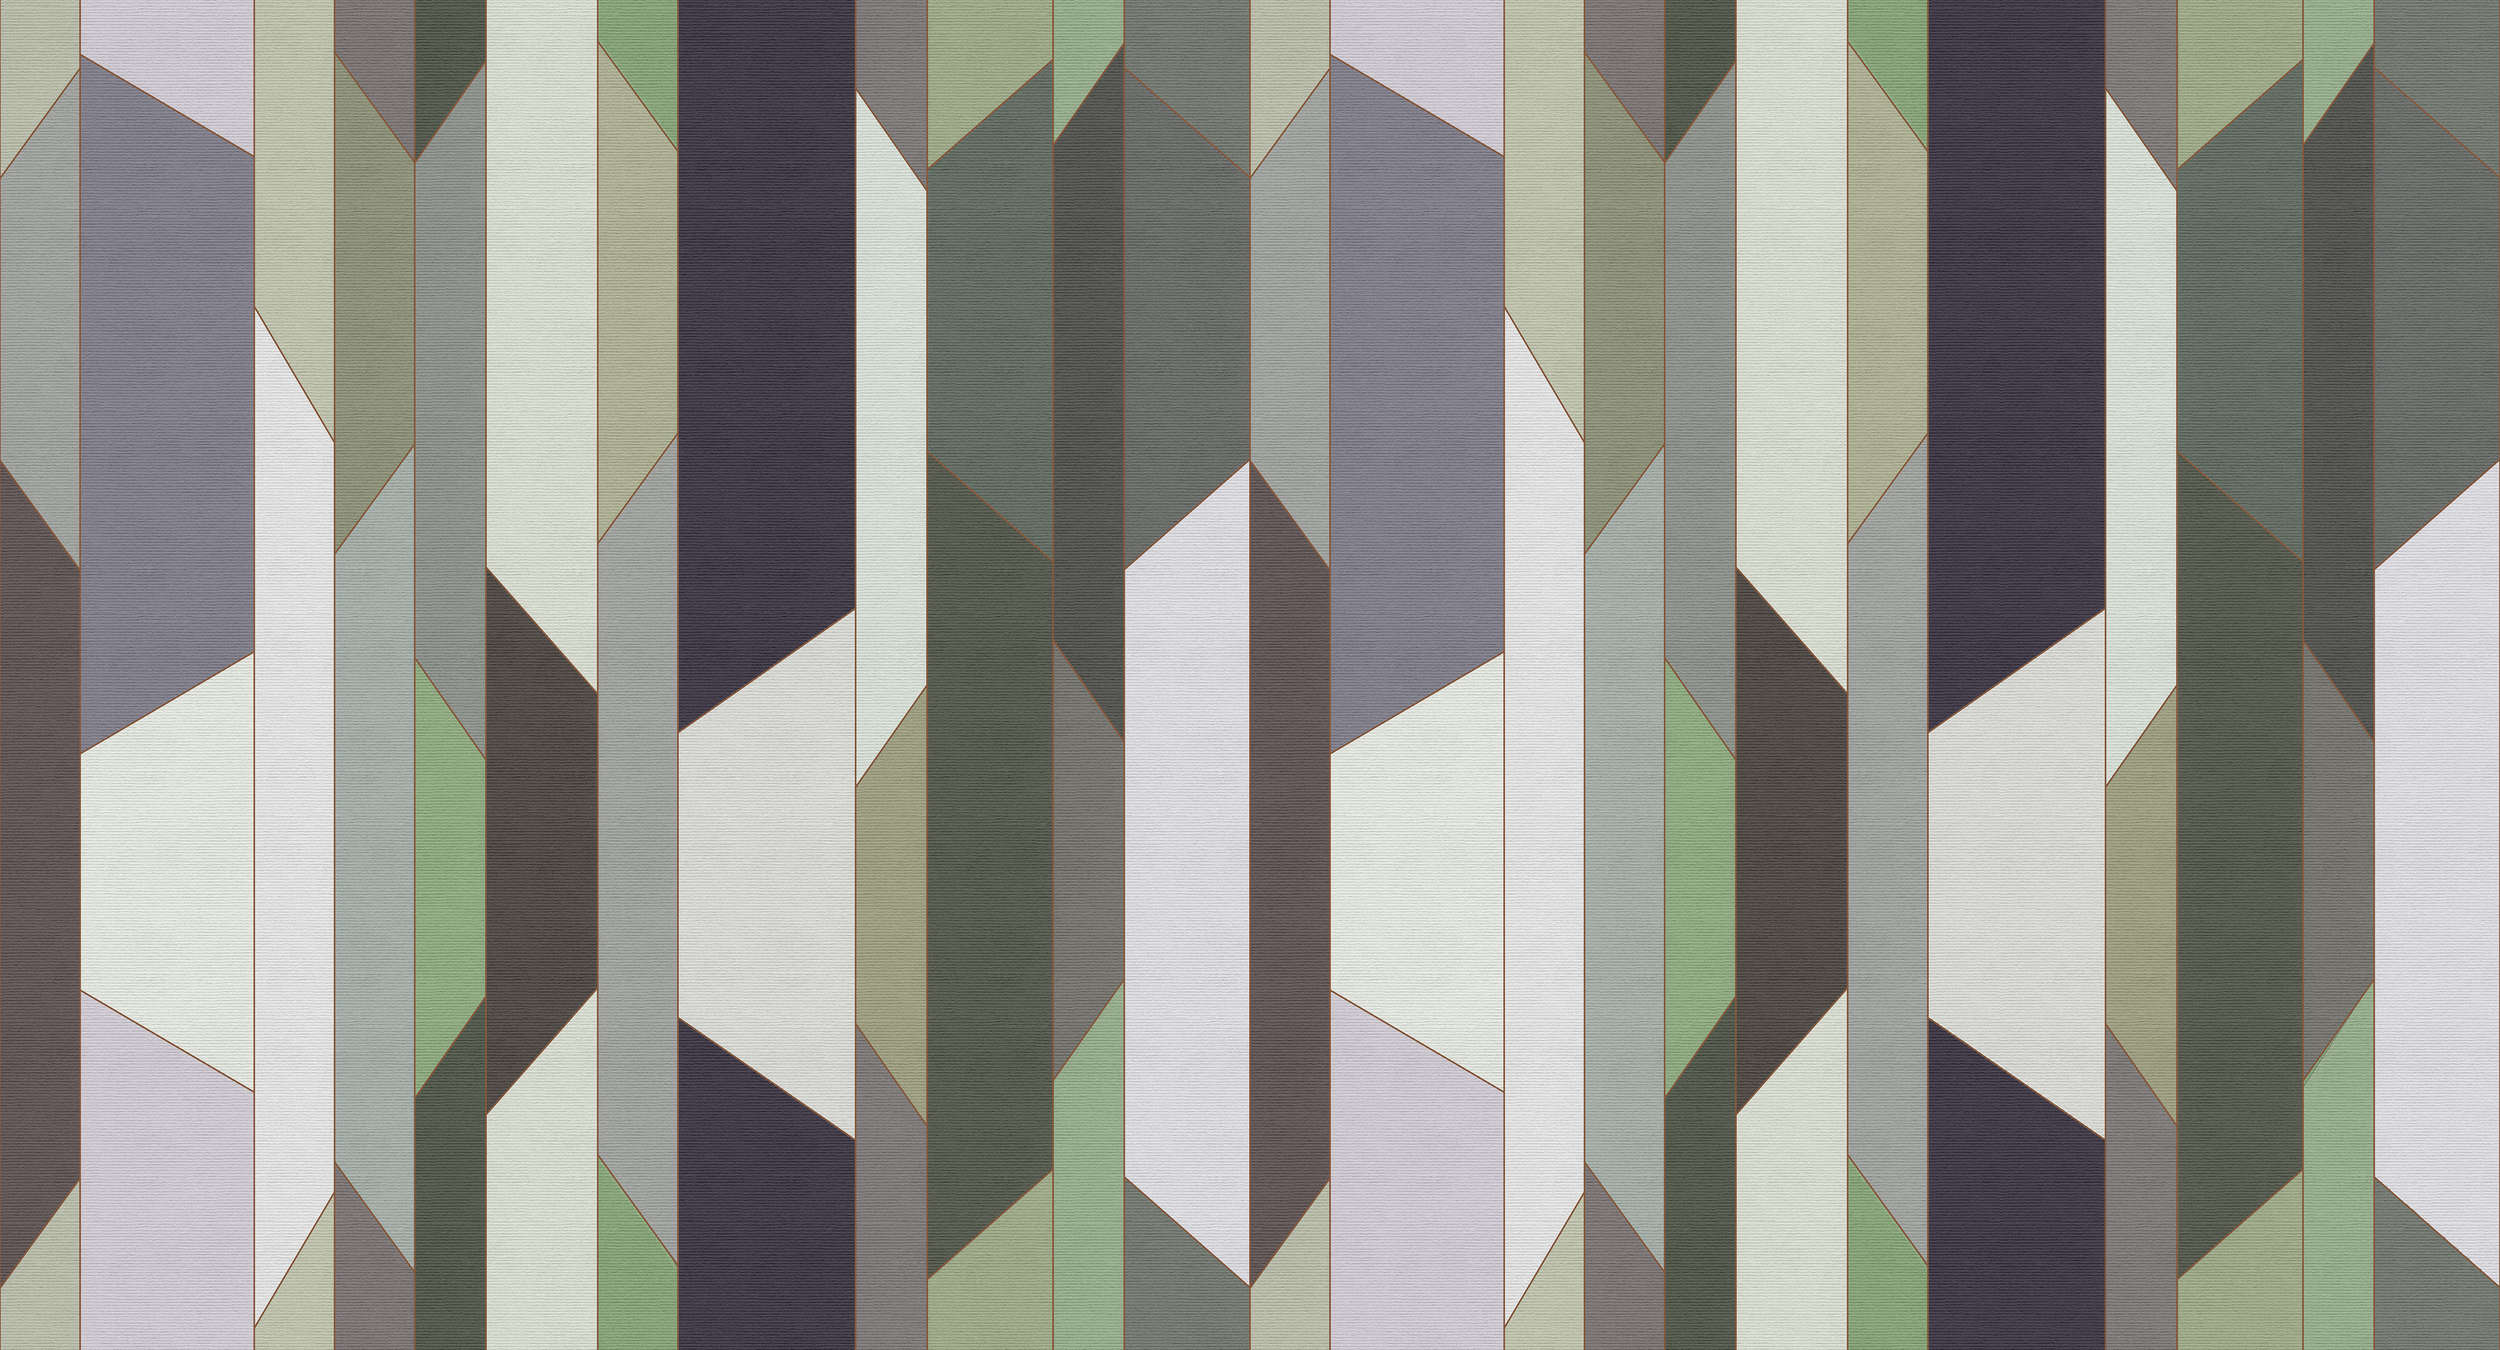             Fold 1 - Retro style stripe wallpaper in ribbed texture - Beige, Cream | Matt smooth fleece
        